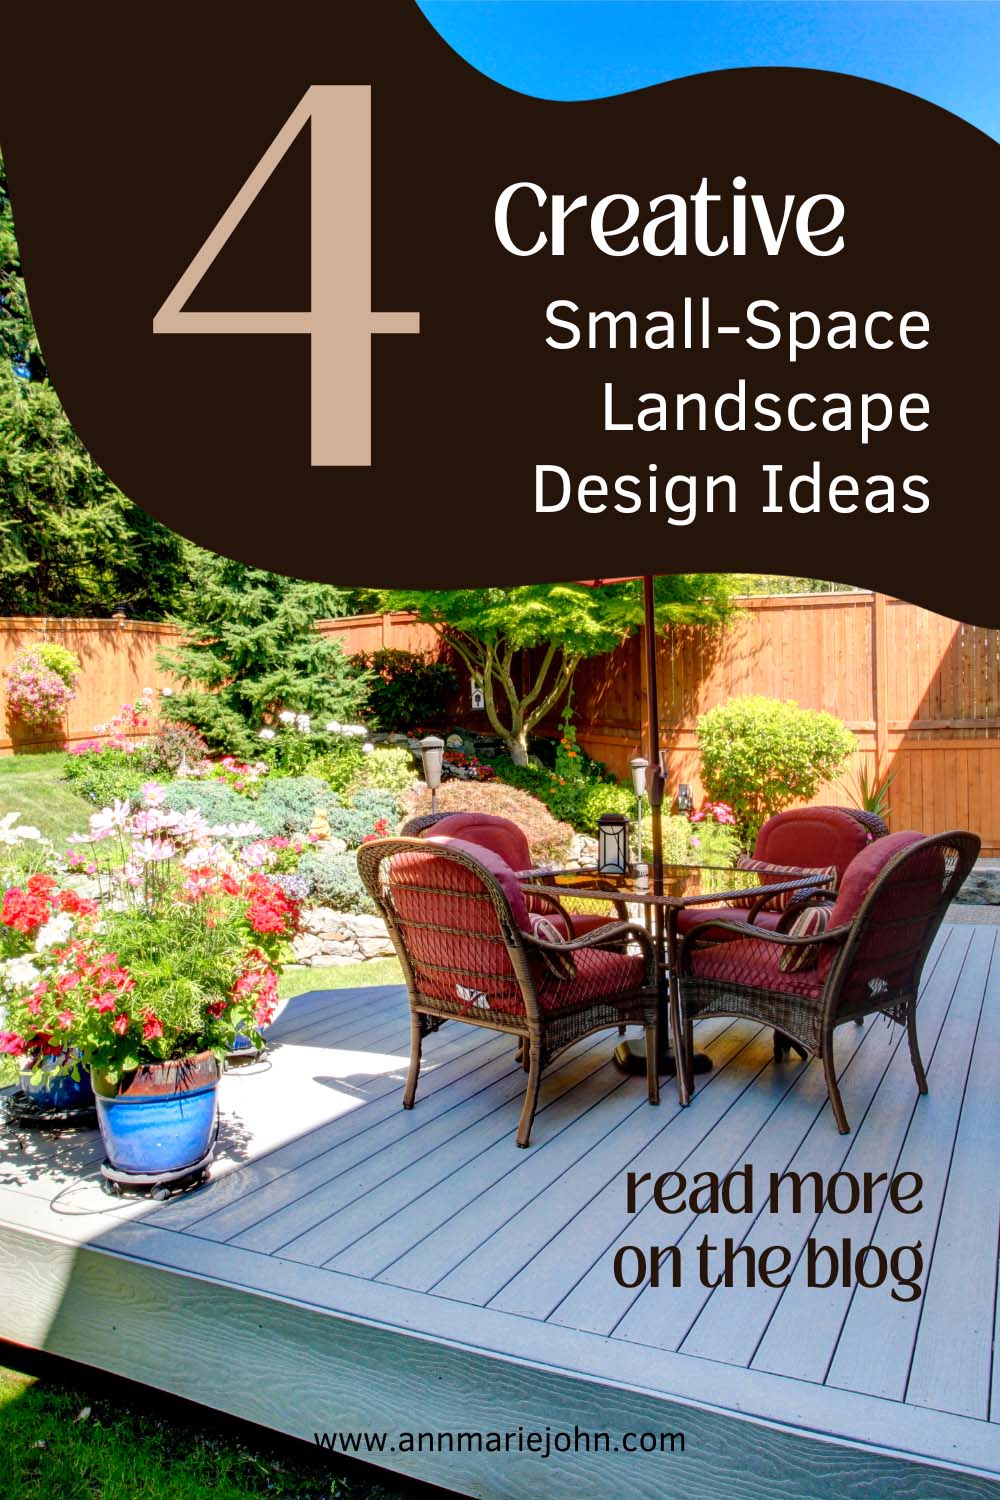 Small-Space Landscape Design Ideas